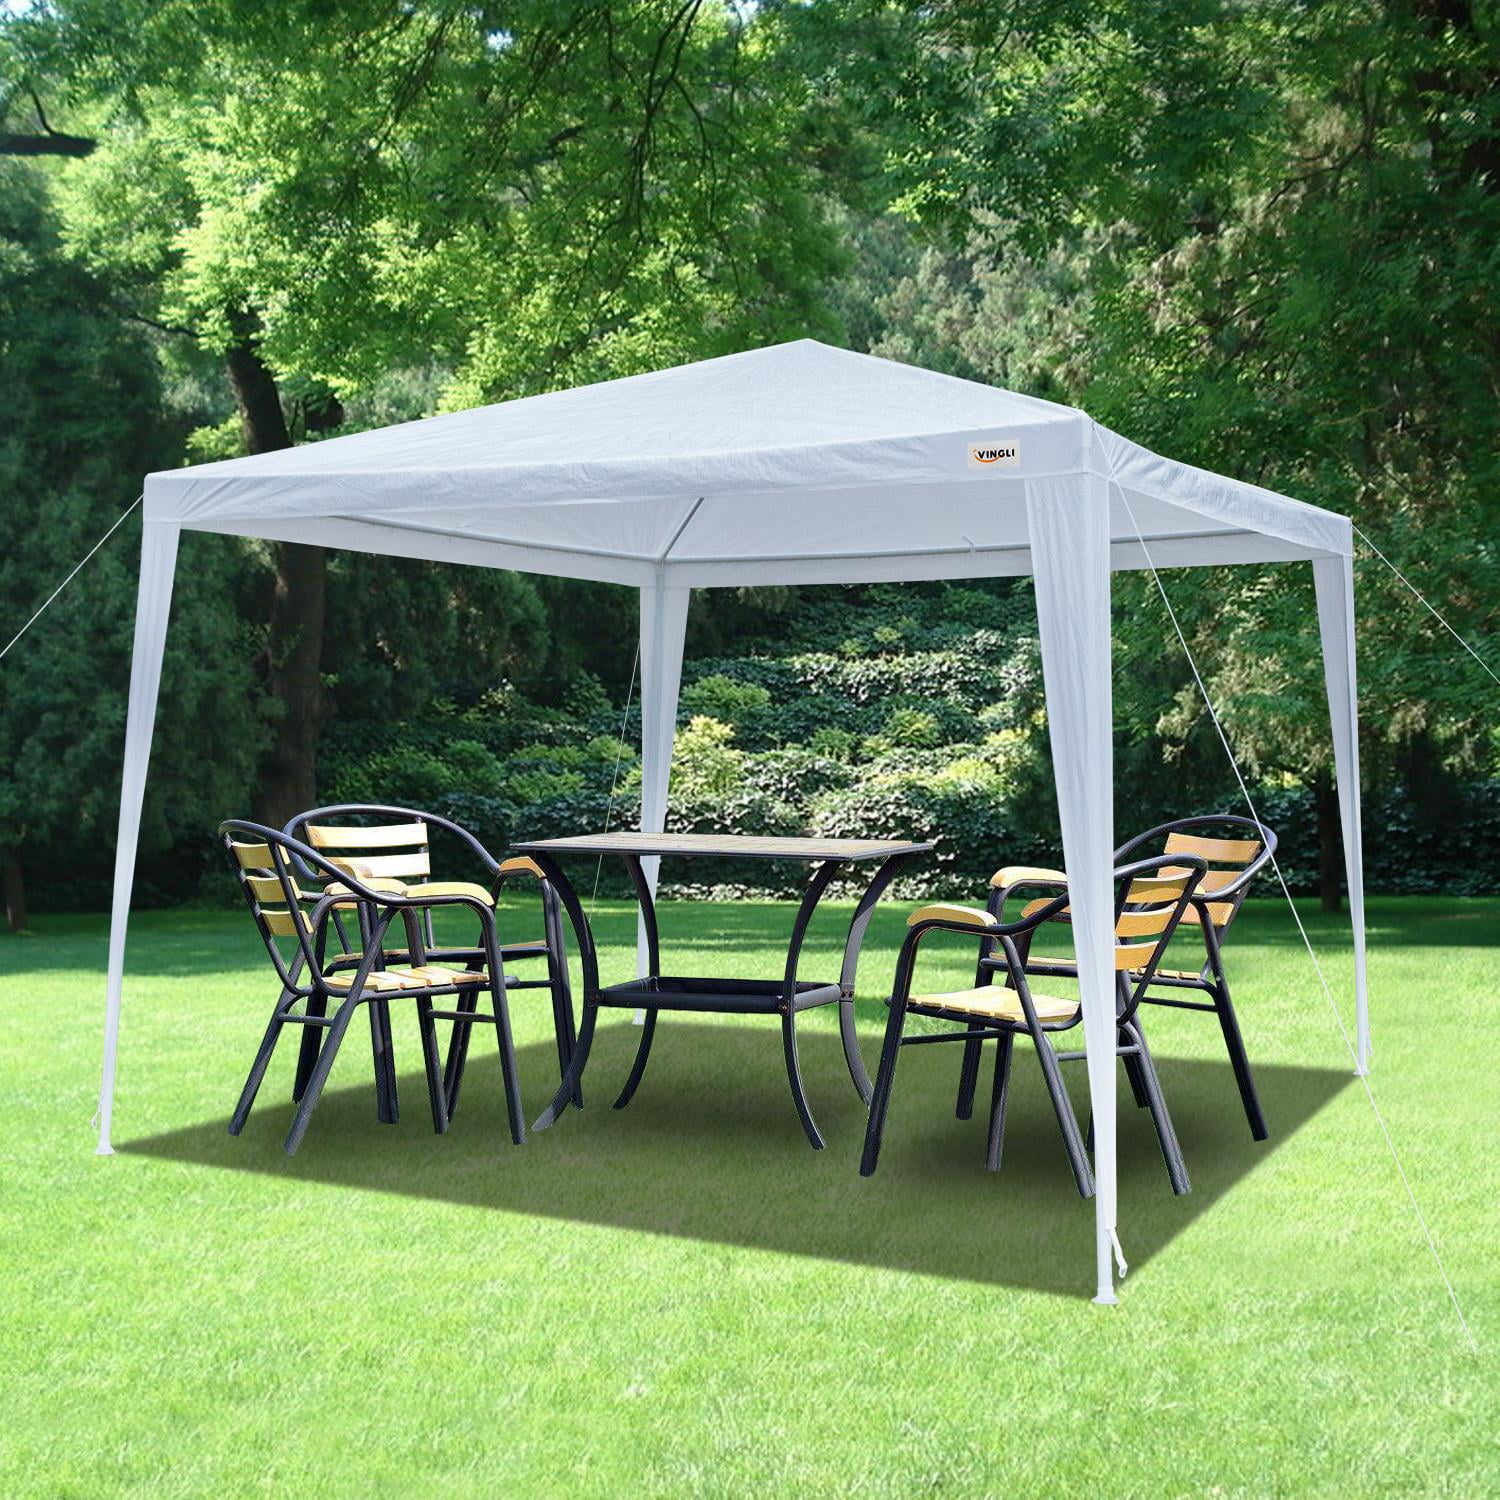 Ktaxon 10' x 10' Canopy Tent Wedding Party Tent Outdoor White - Walmart.com